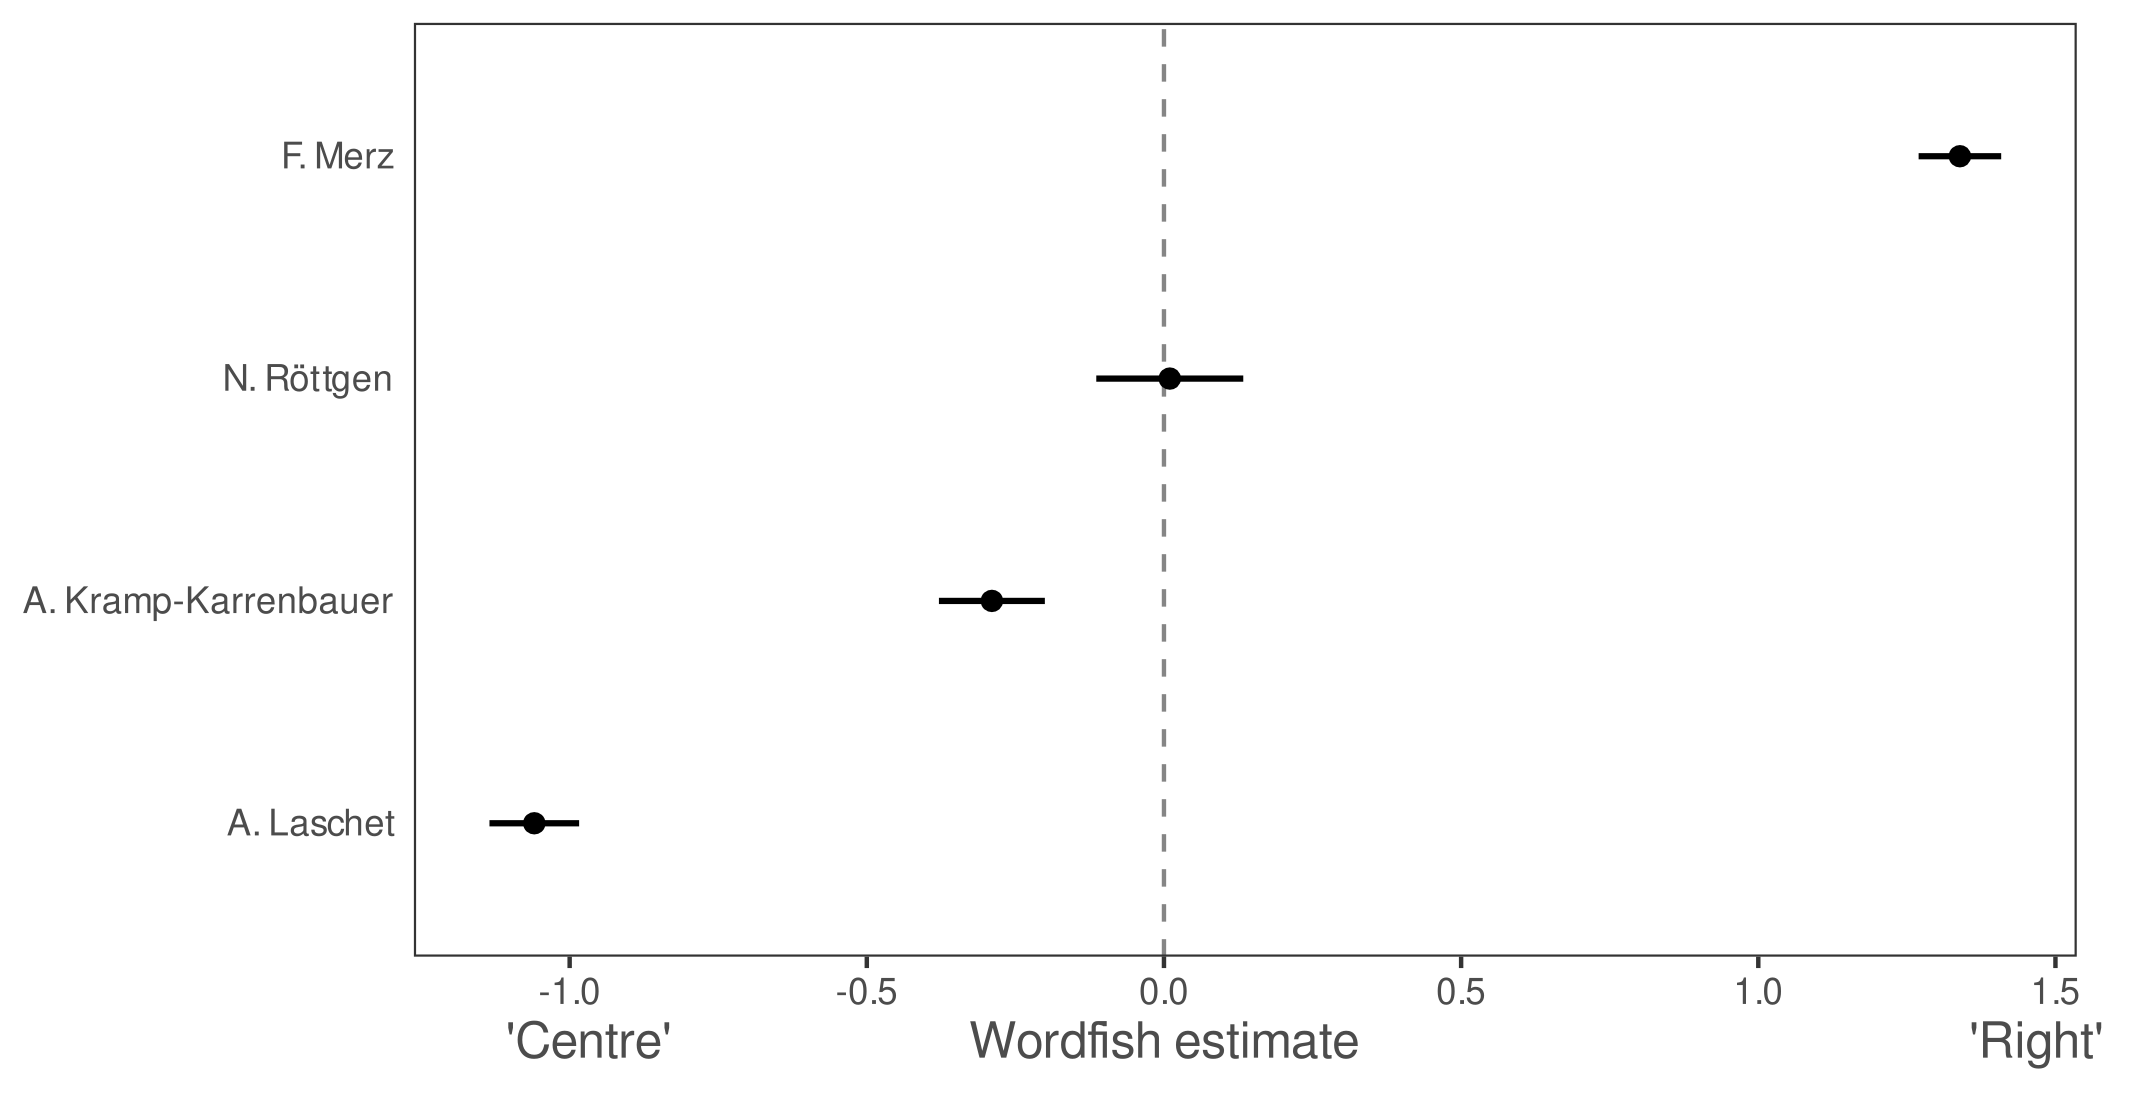 Ideological differences between the CDU candidates, based on Wordfish estimates.